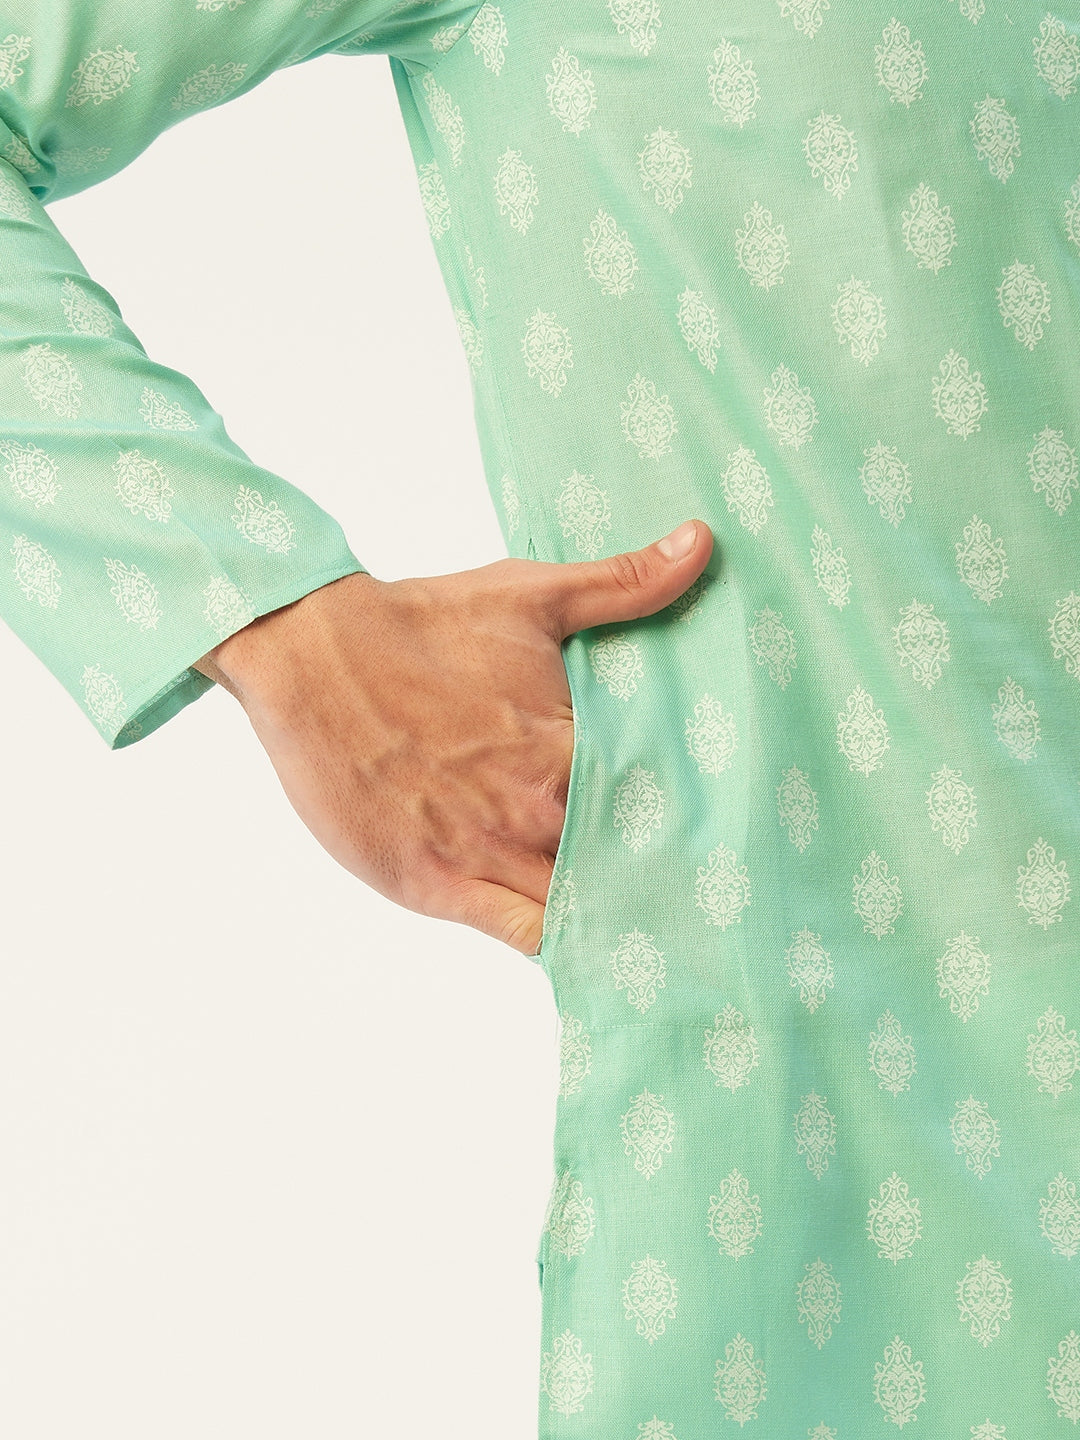 Men's Green Cotton Floral printed kurta Only( KO 650 Green ) - Virat Fashions